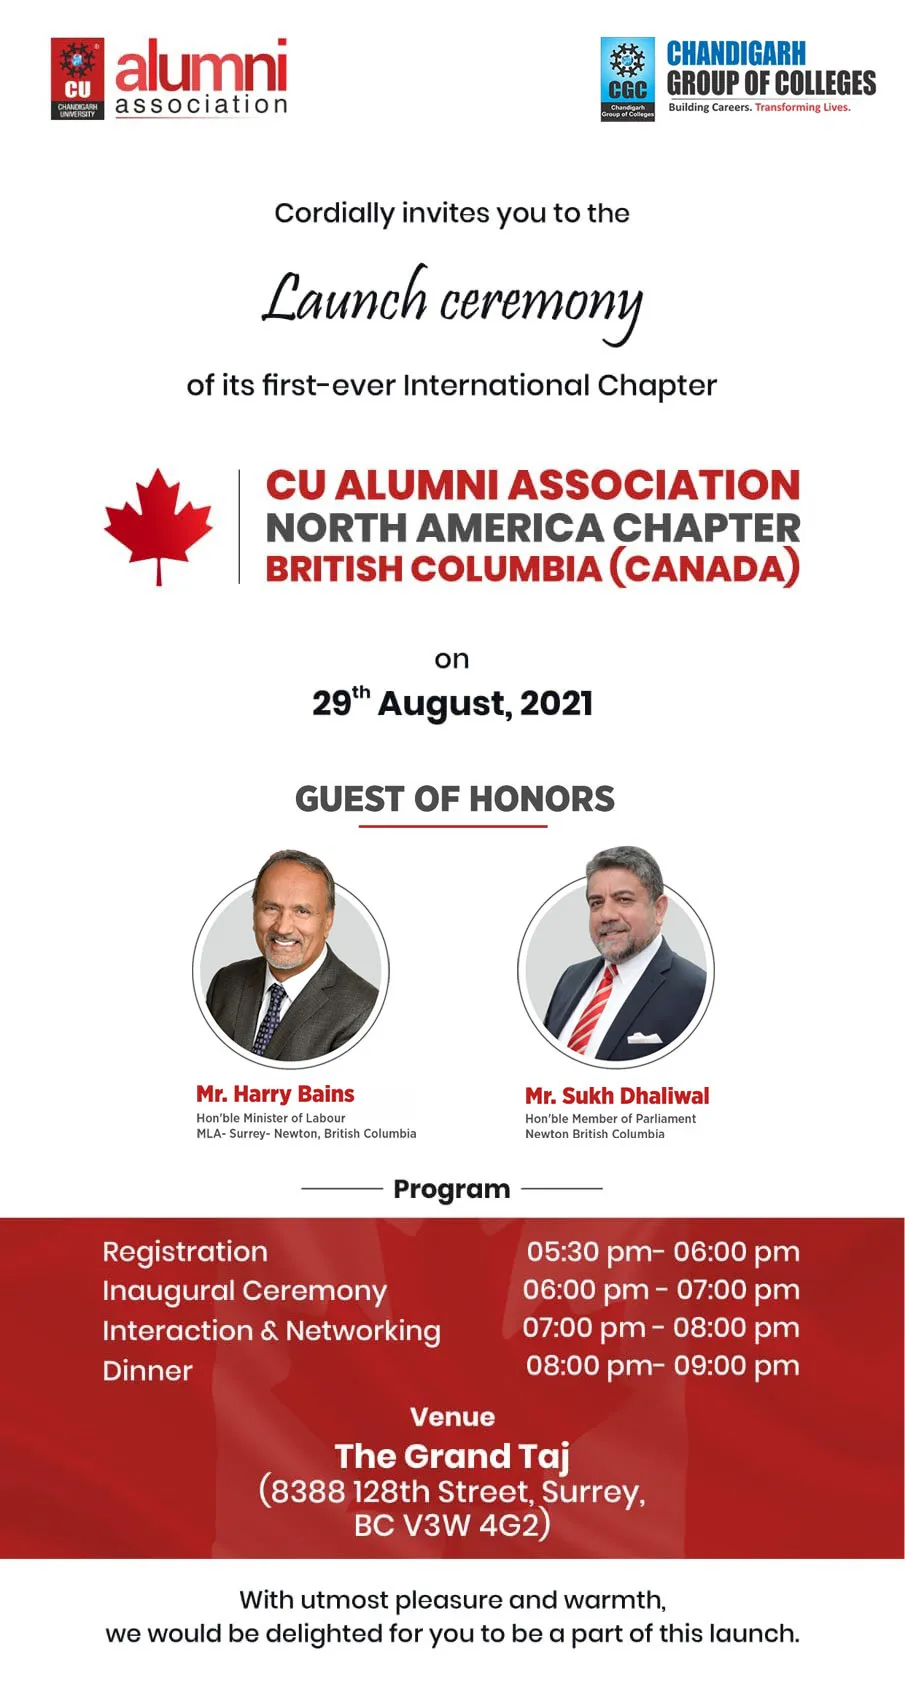 CU Alumni Association North America Chapter British Columbia (Canada)